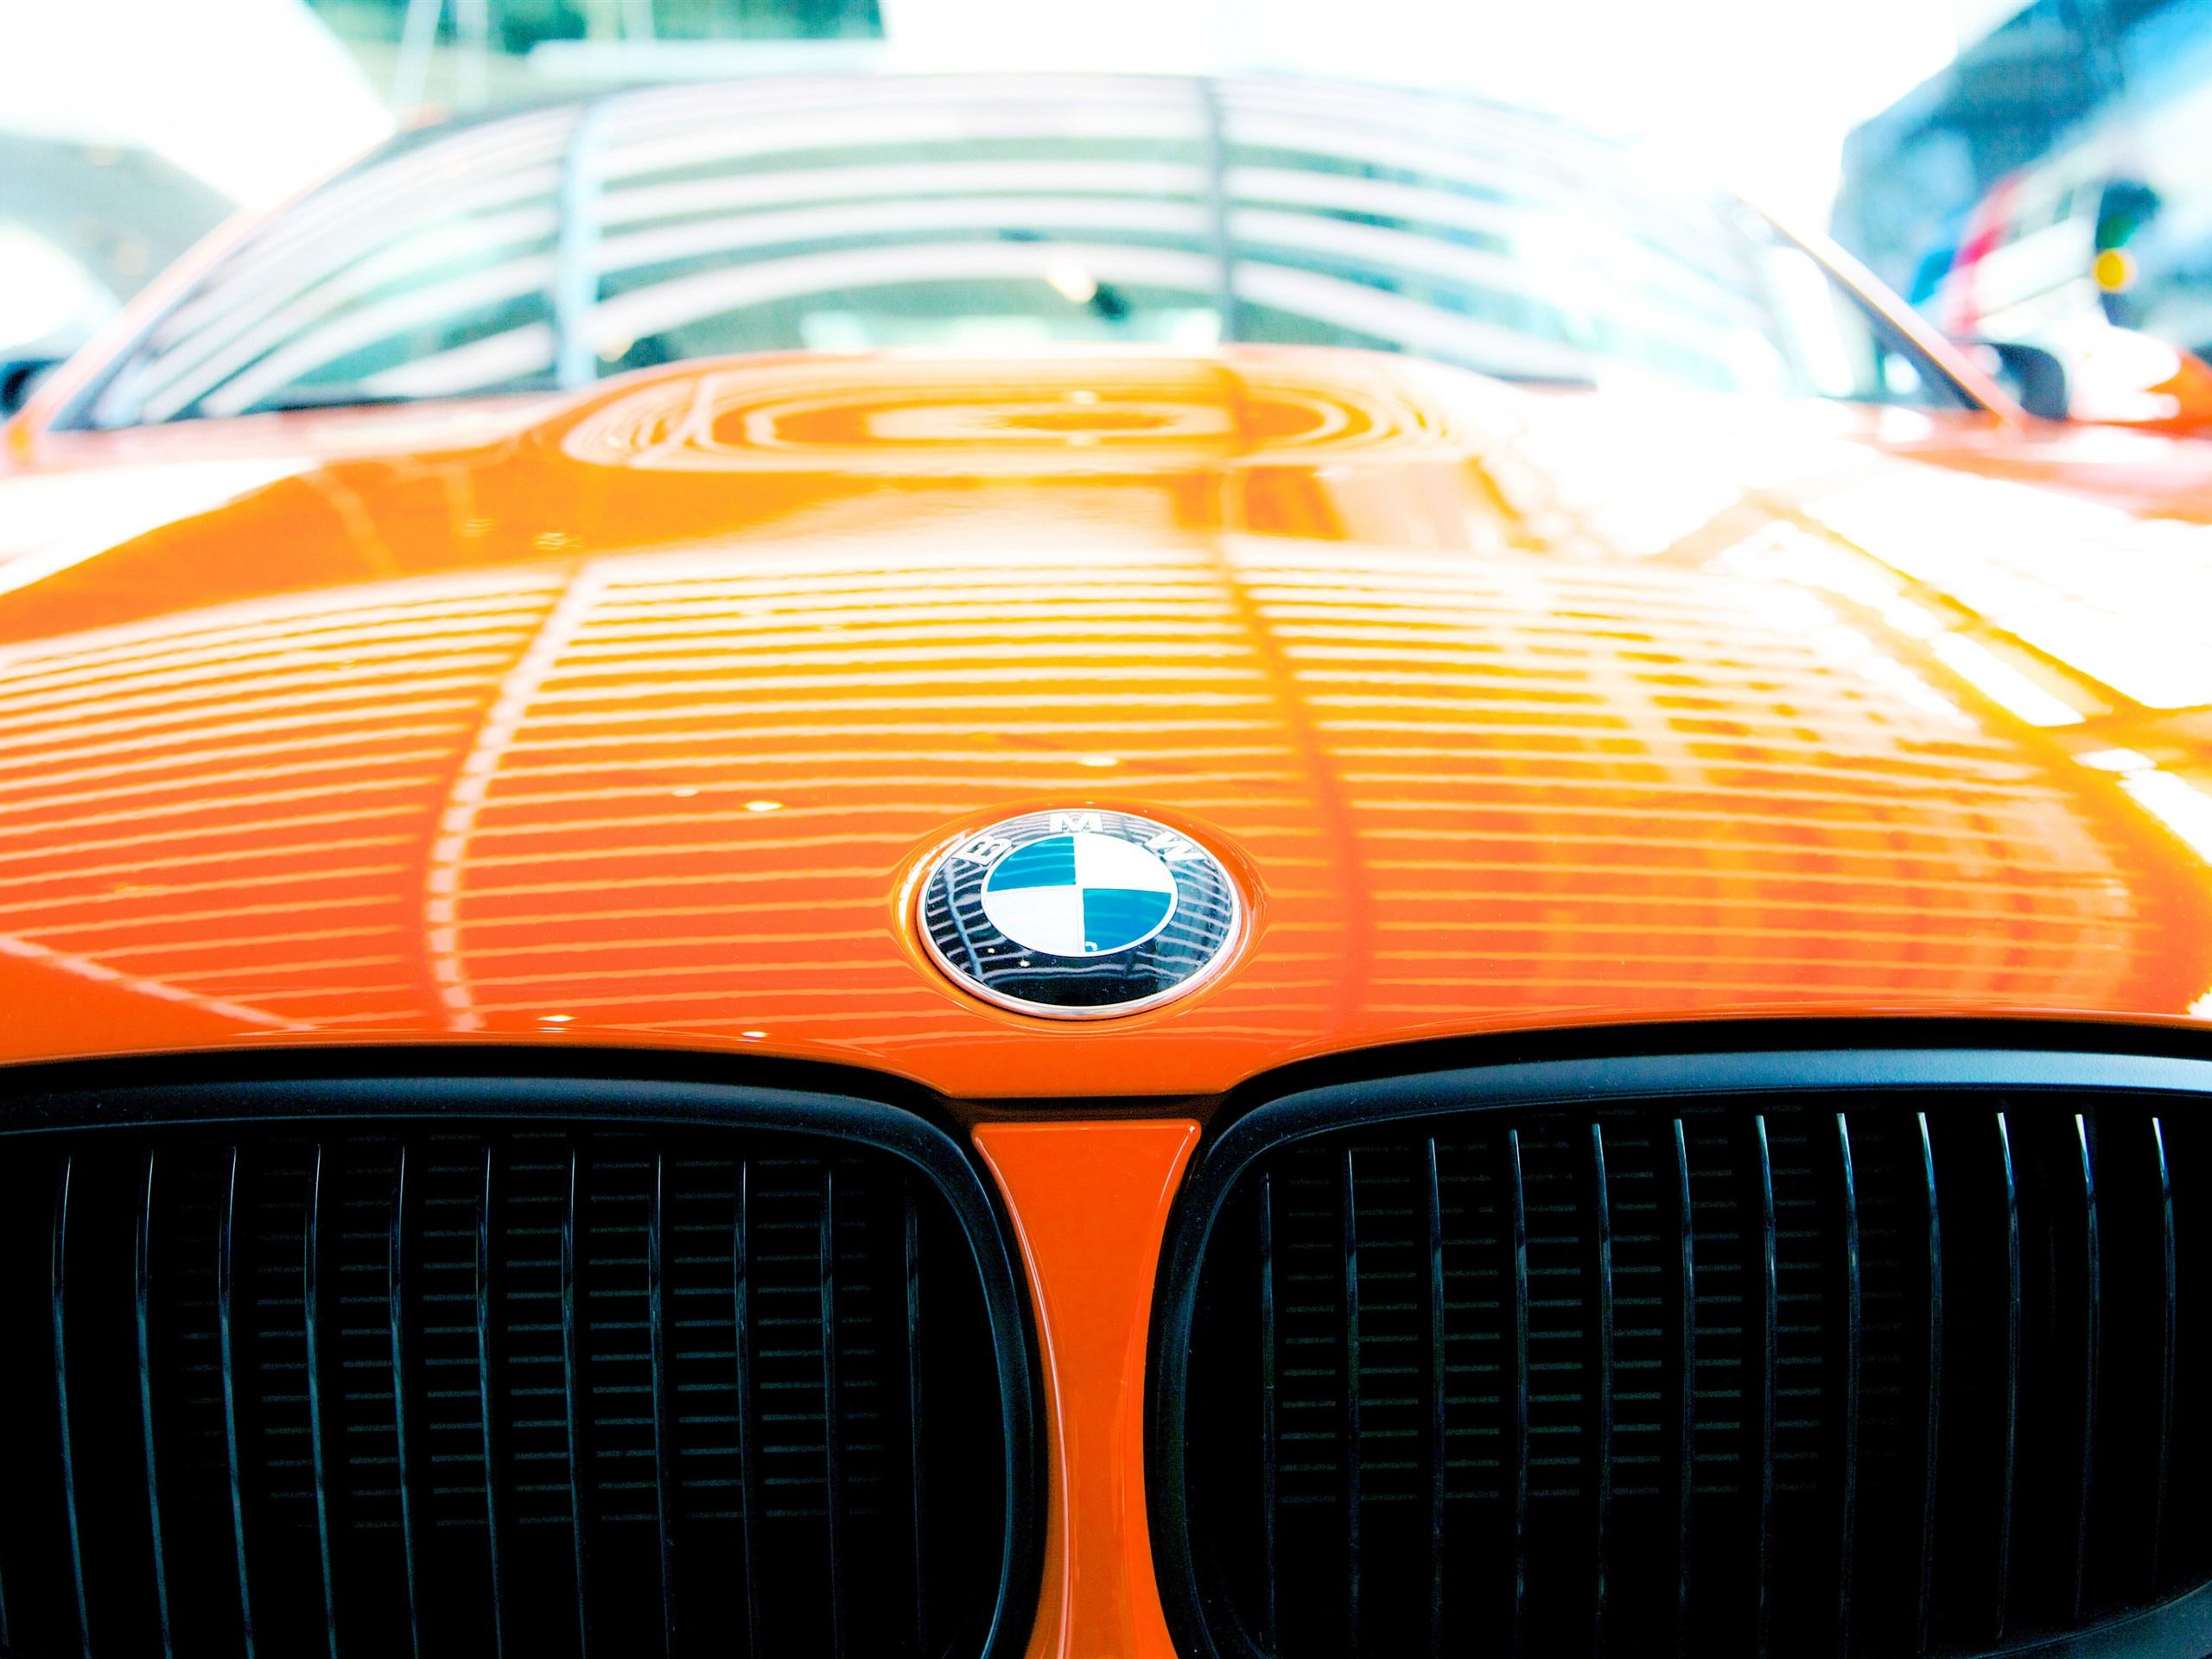  BMW HD Hintergrundbild 2560x1920. BMW Logo, orangefarbenes Auto 5120x2880 UHD 5K Hintergrundbilder, HD, Bild